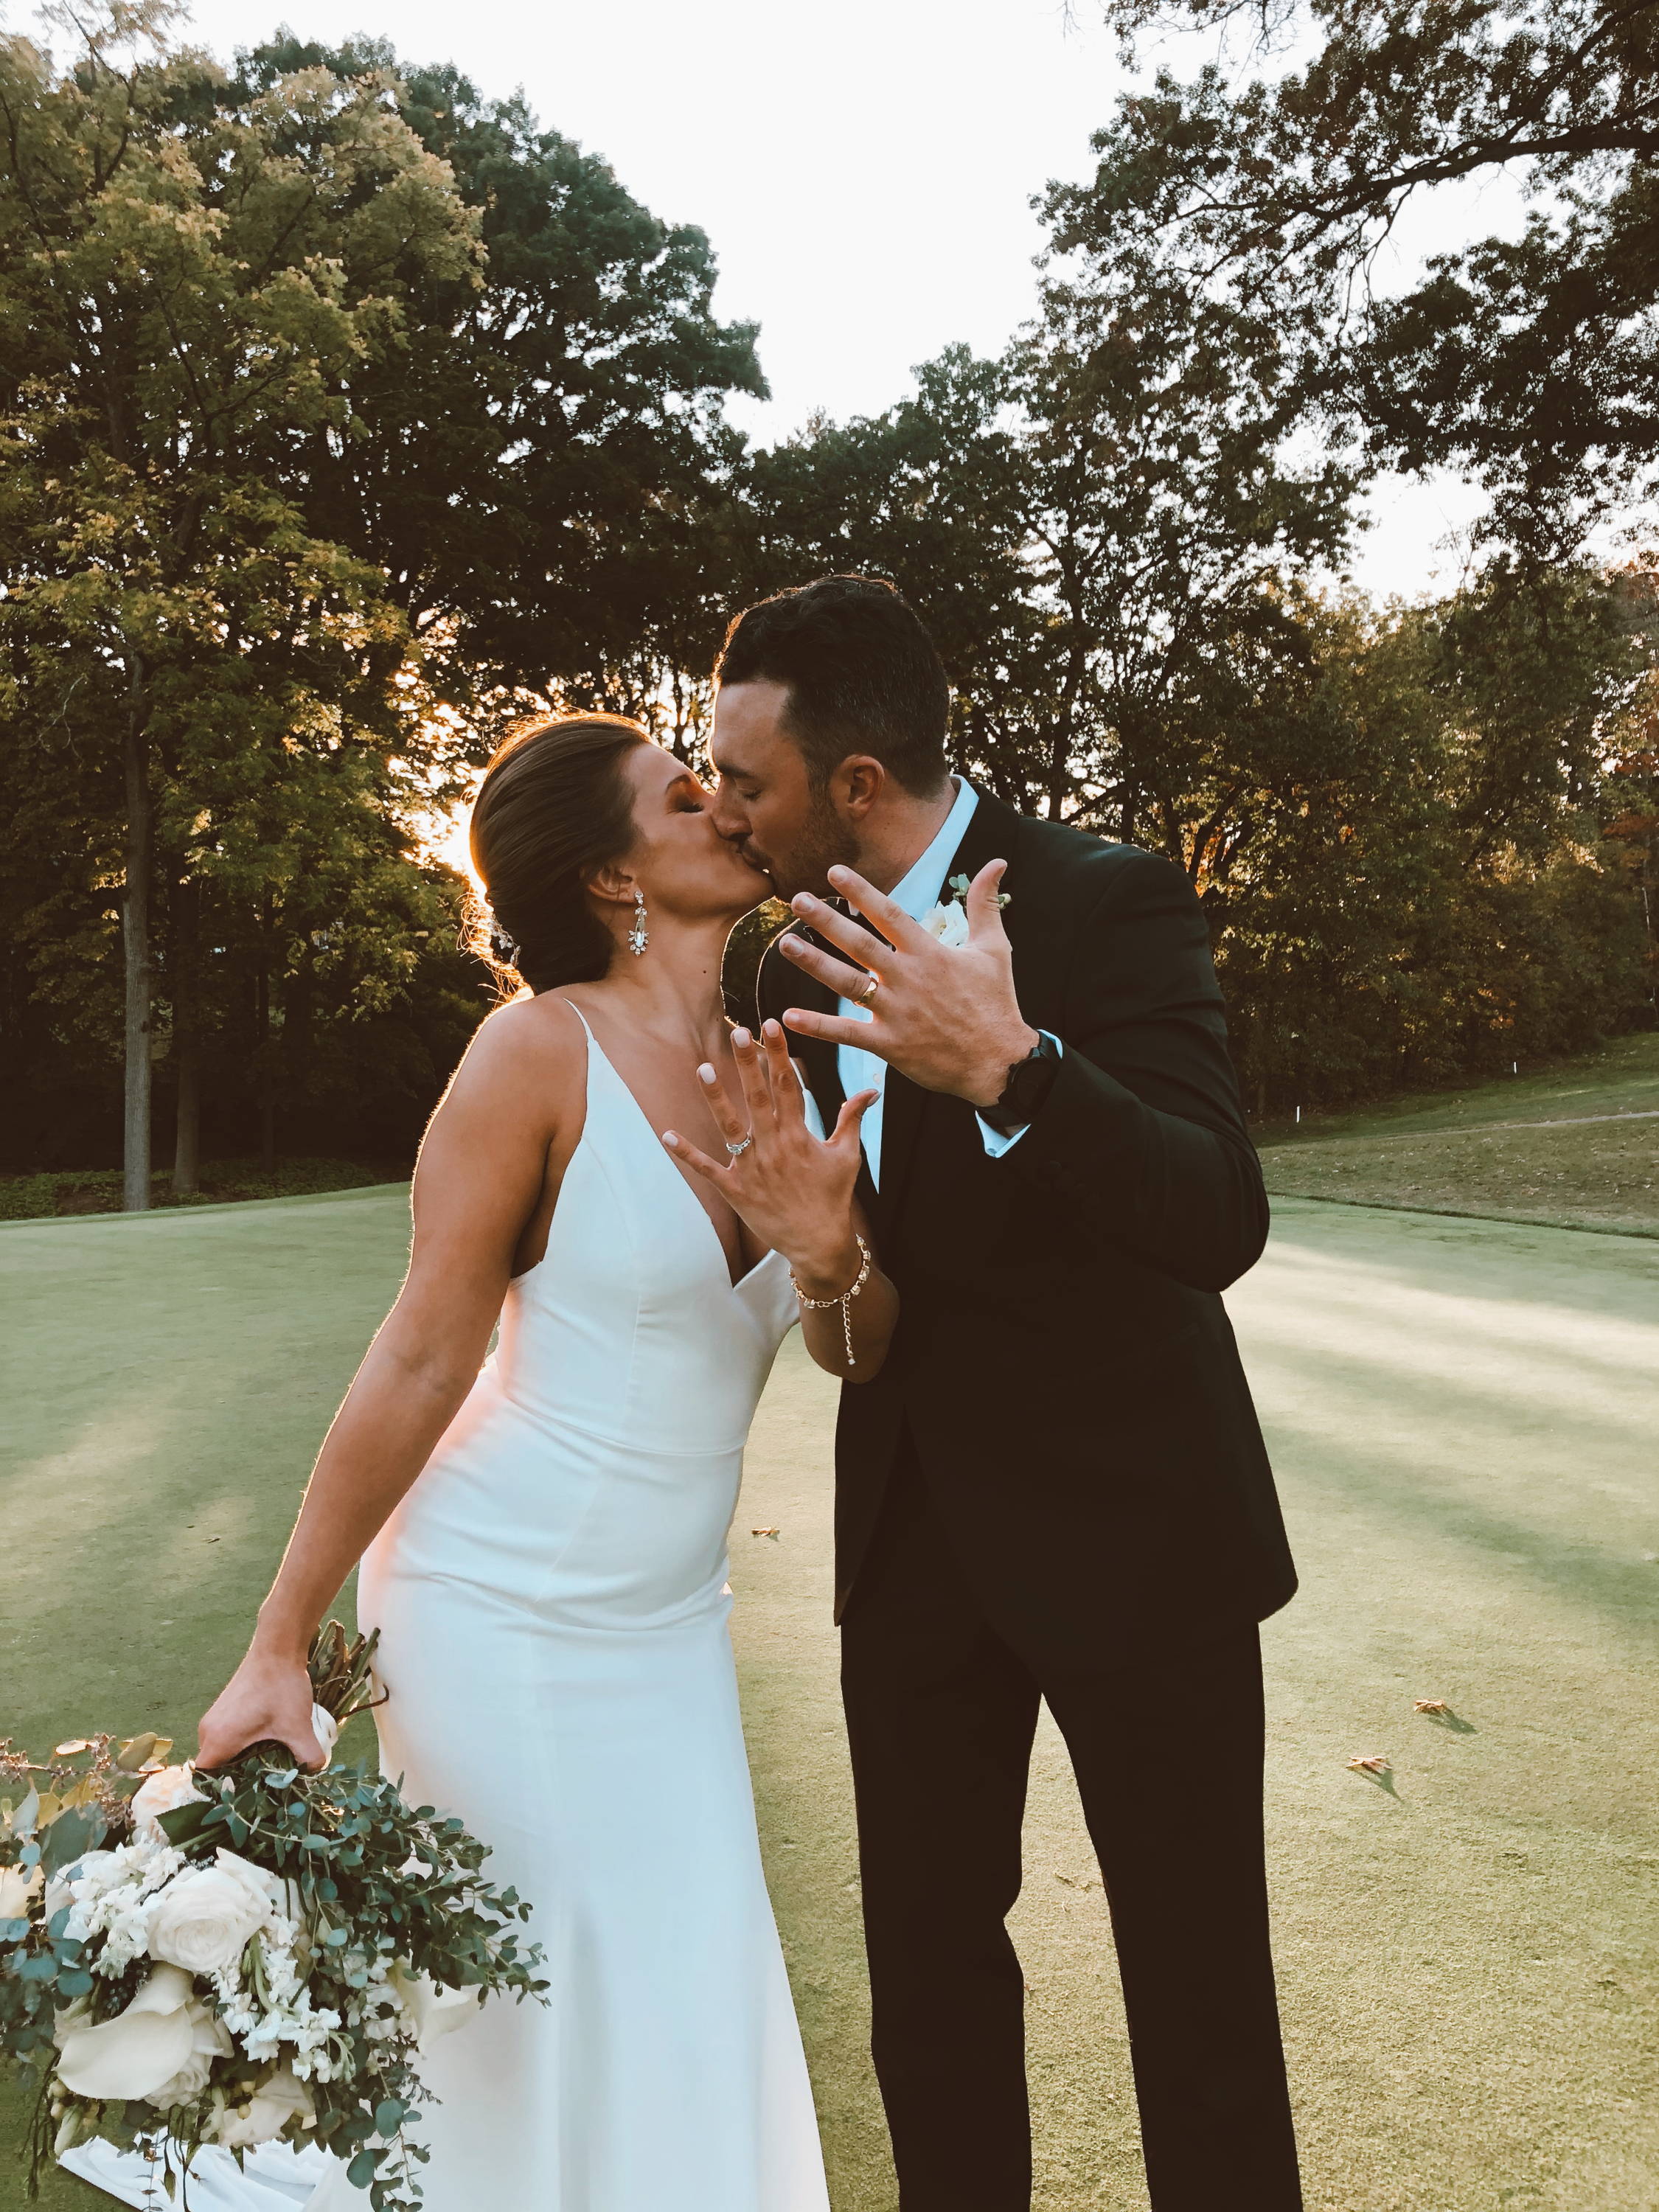 Alexander & Emily Share a Kiss on Their Wedding Day